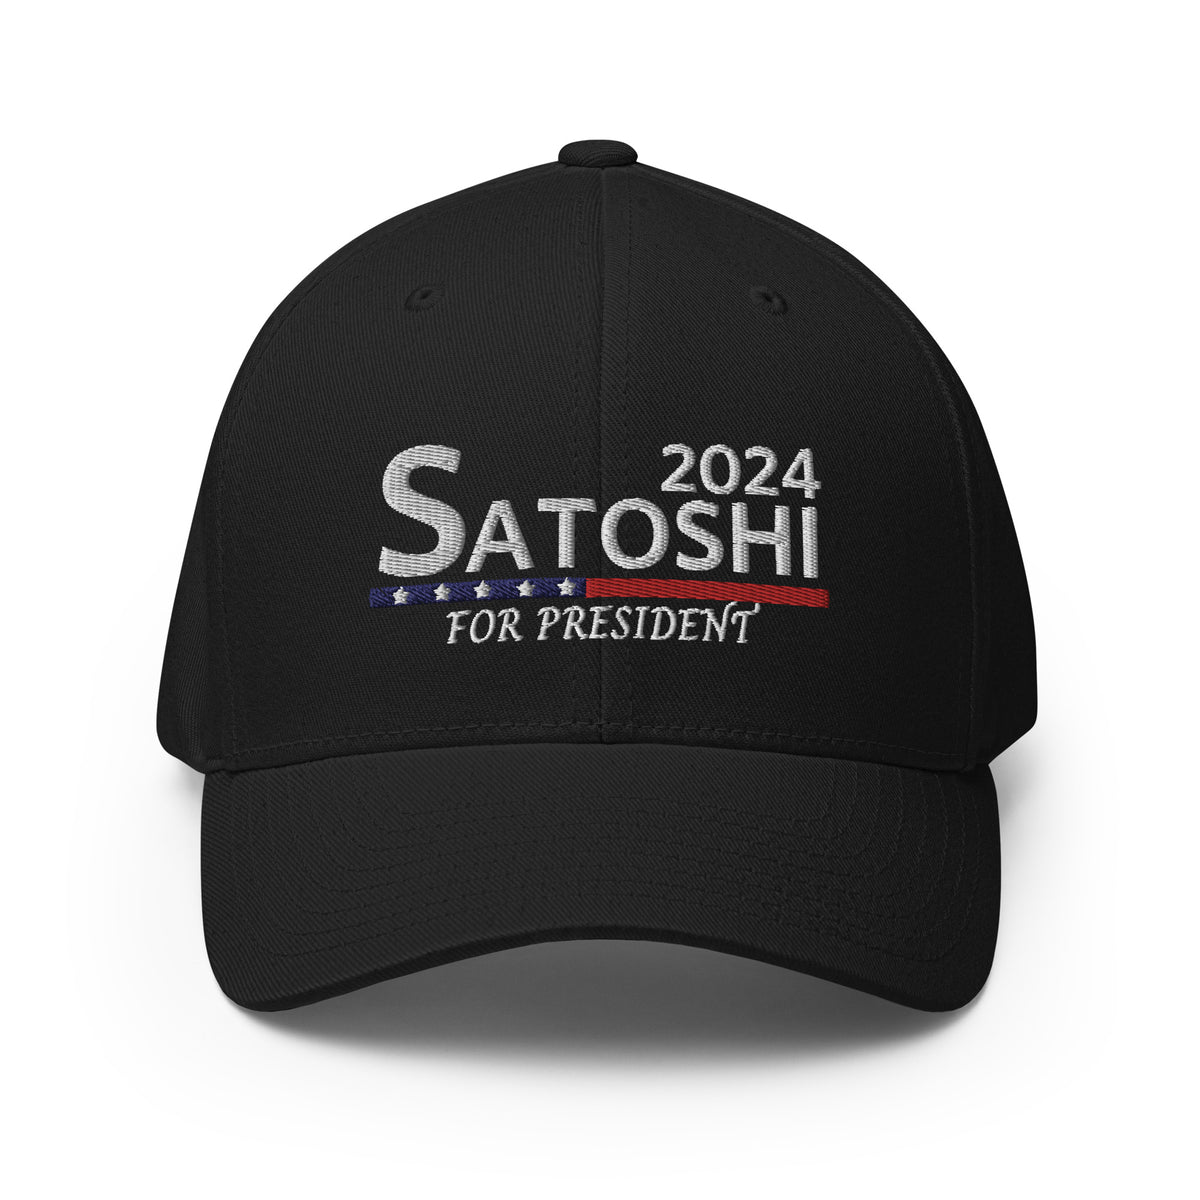 Satoshi For President 2024 (White Embroidery) Bitcoin Flexfit Hat